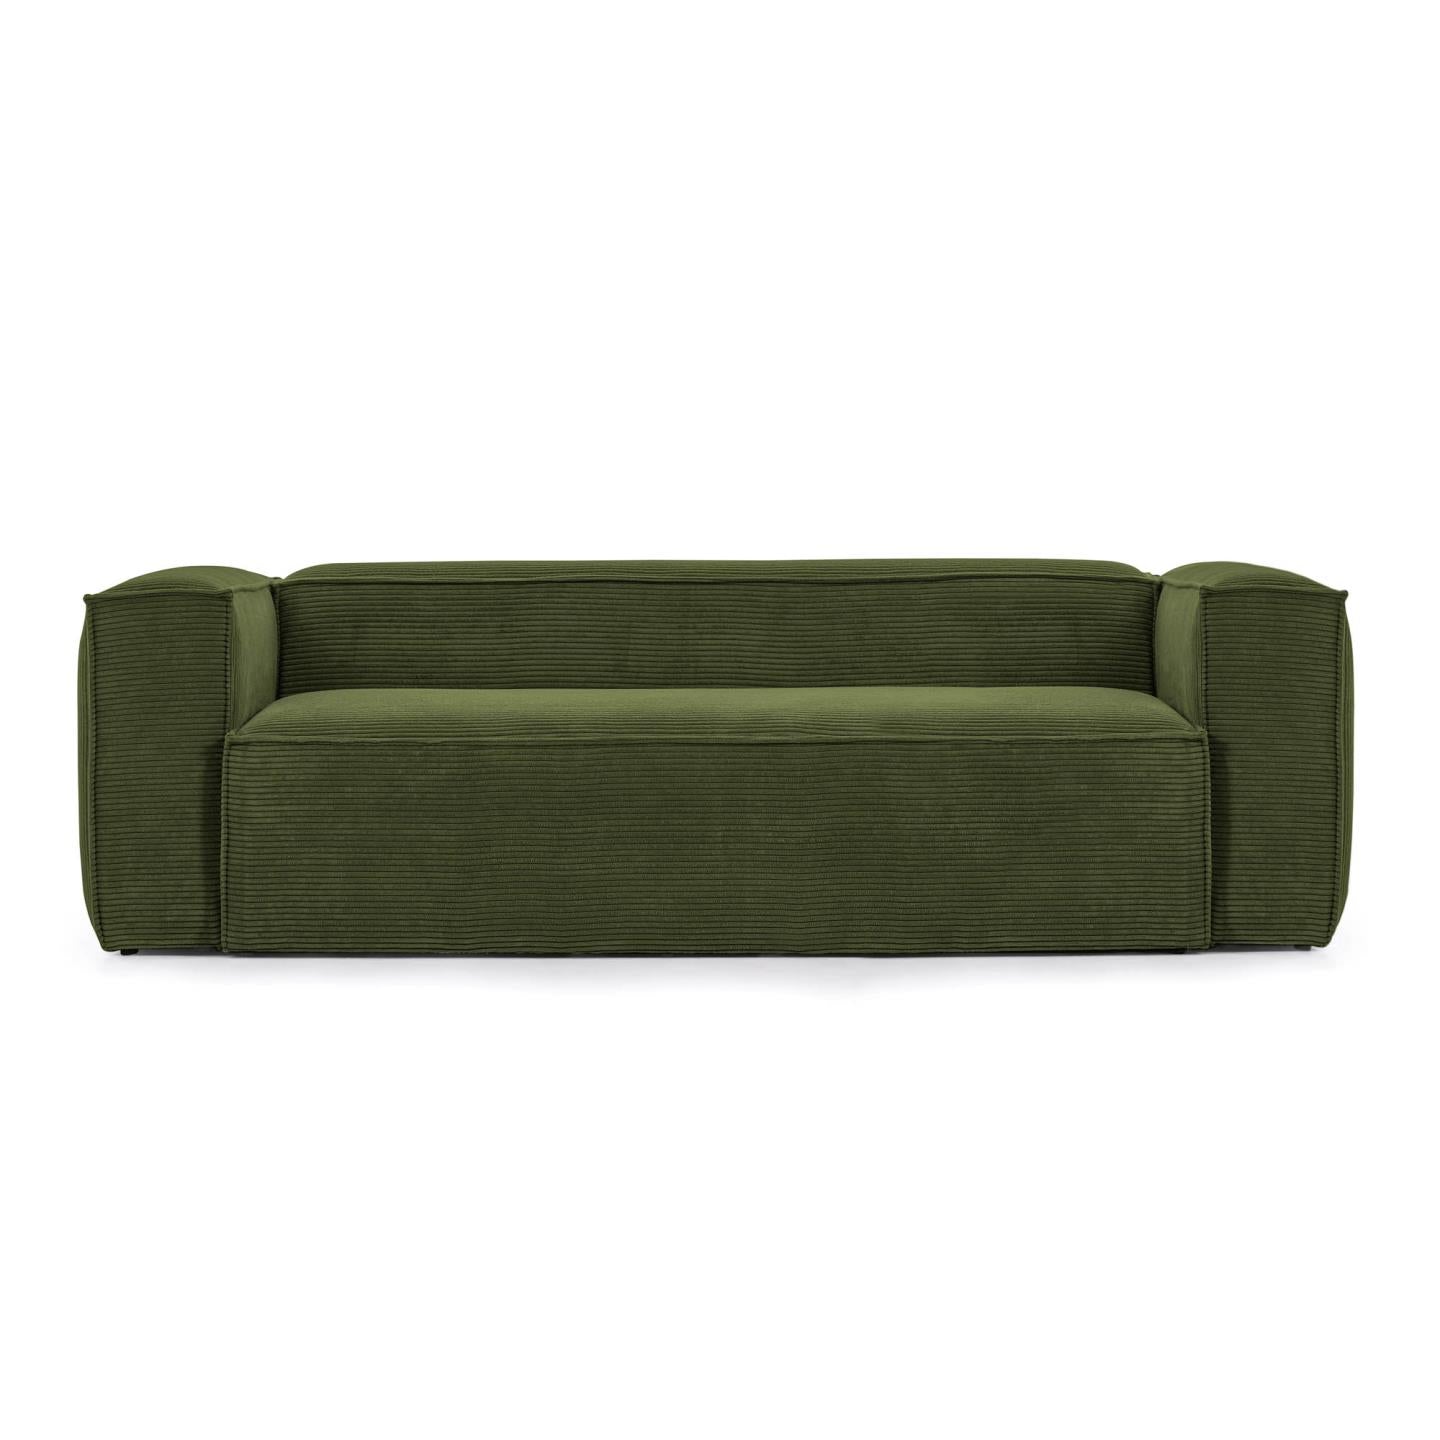 Blok 2 seater sofa in green wide seam corduroy, 210 cm